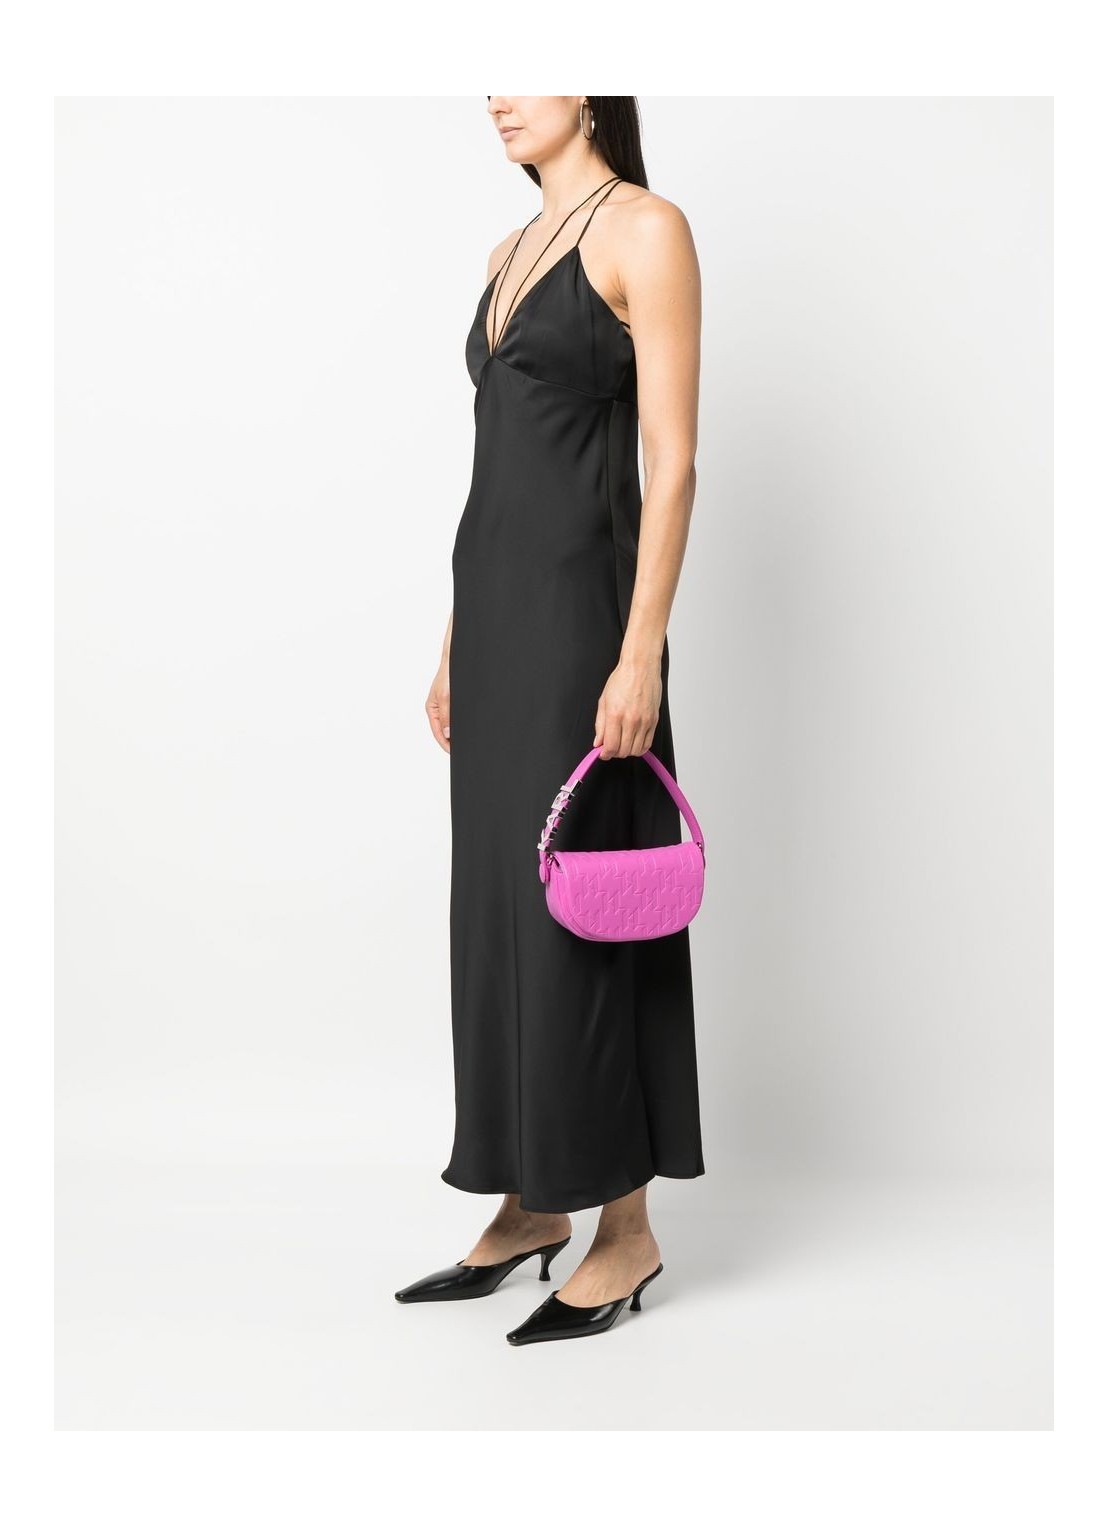 Totes bags Karl Lagerfeld - K/swing sm baguette handbag - 230W3077590